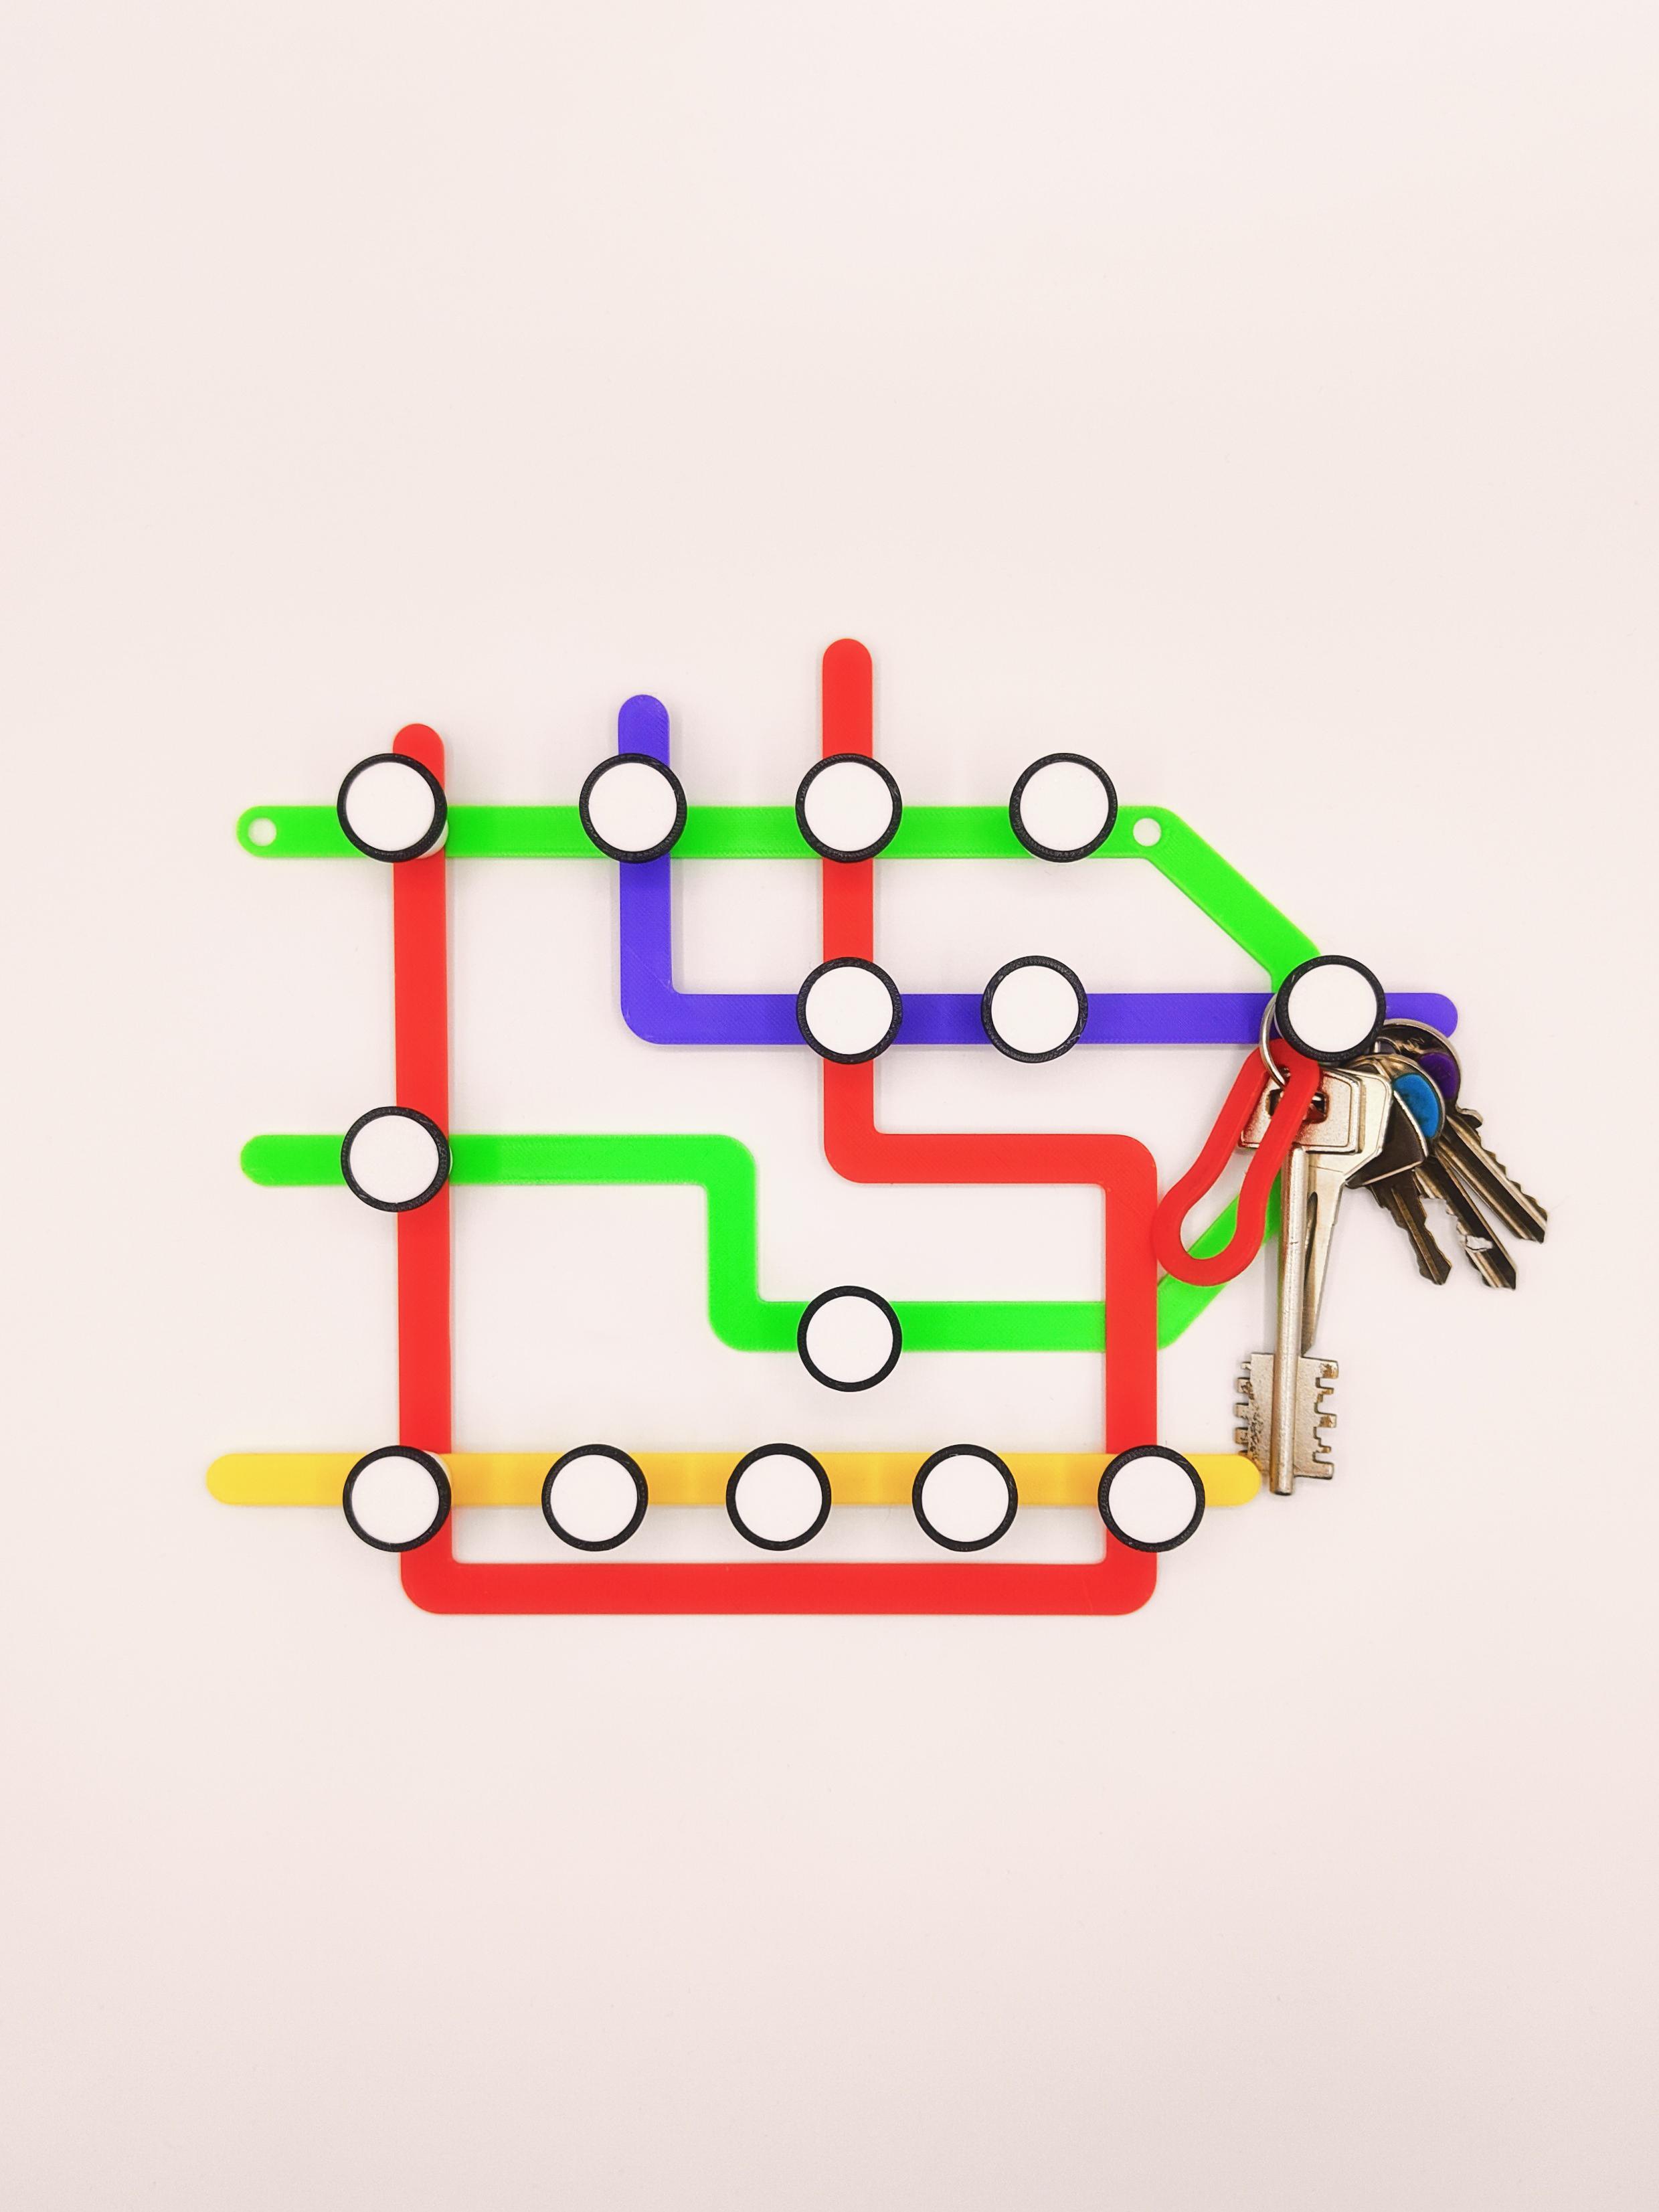 Mini Metro Key Holder by Sparks3d.it